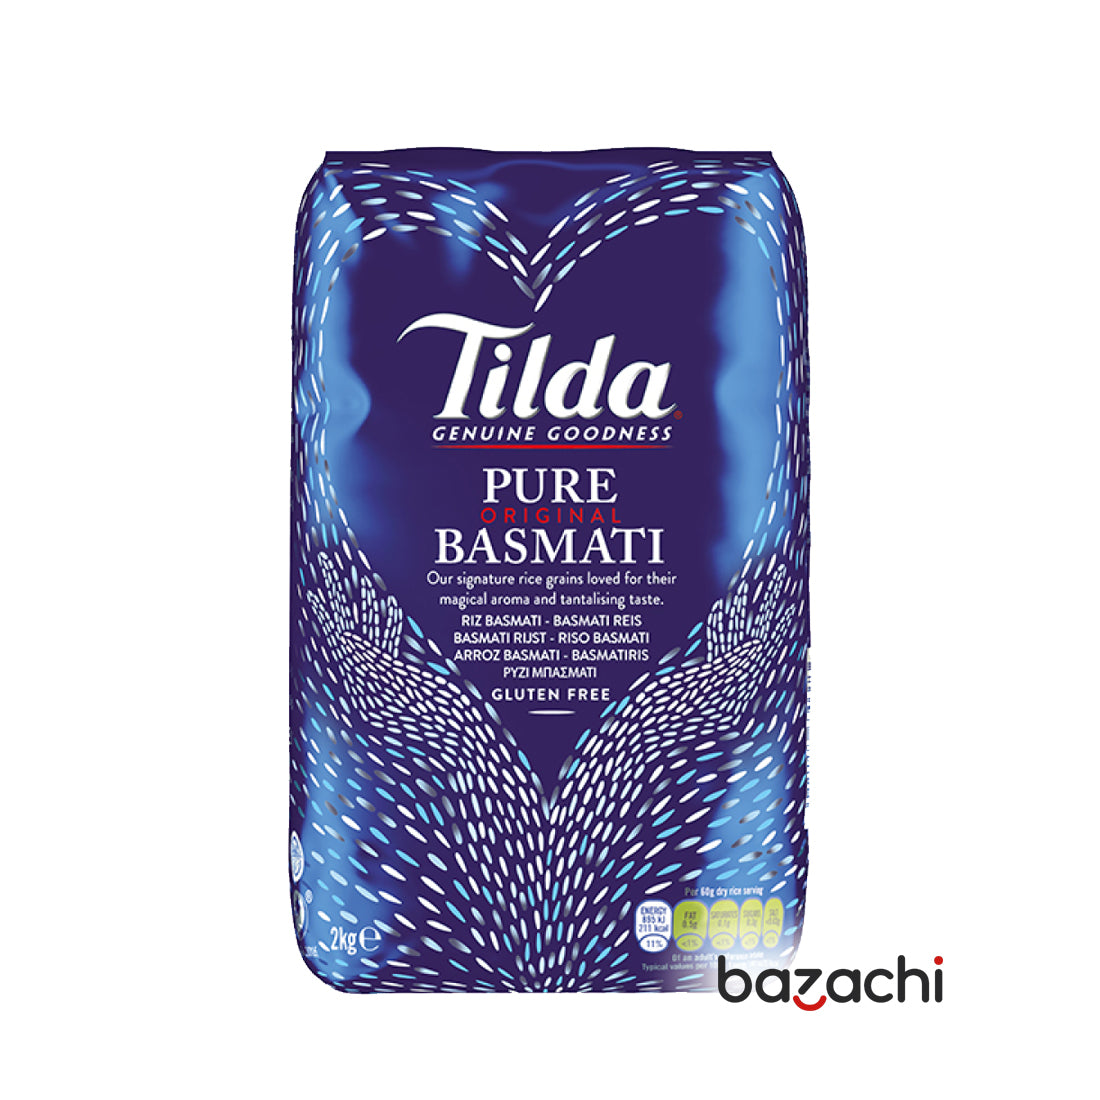 Tilda Pure Basmati Naturally Gluten Free Rice 2kg